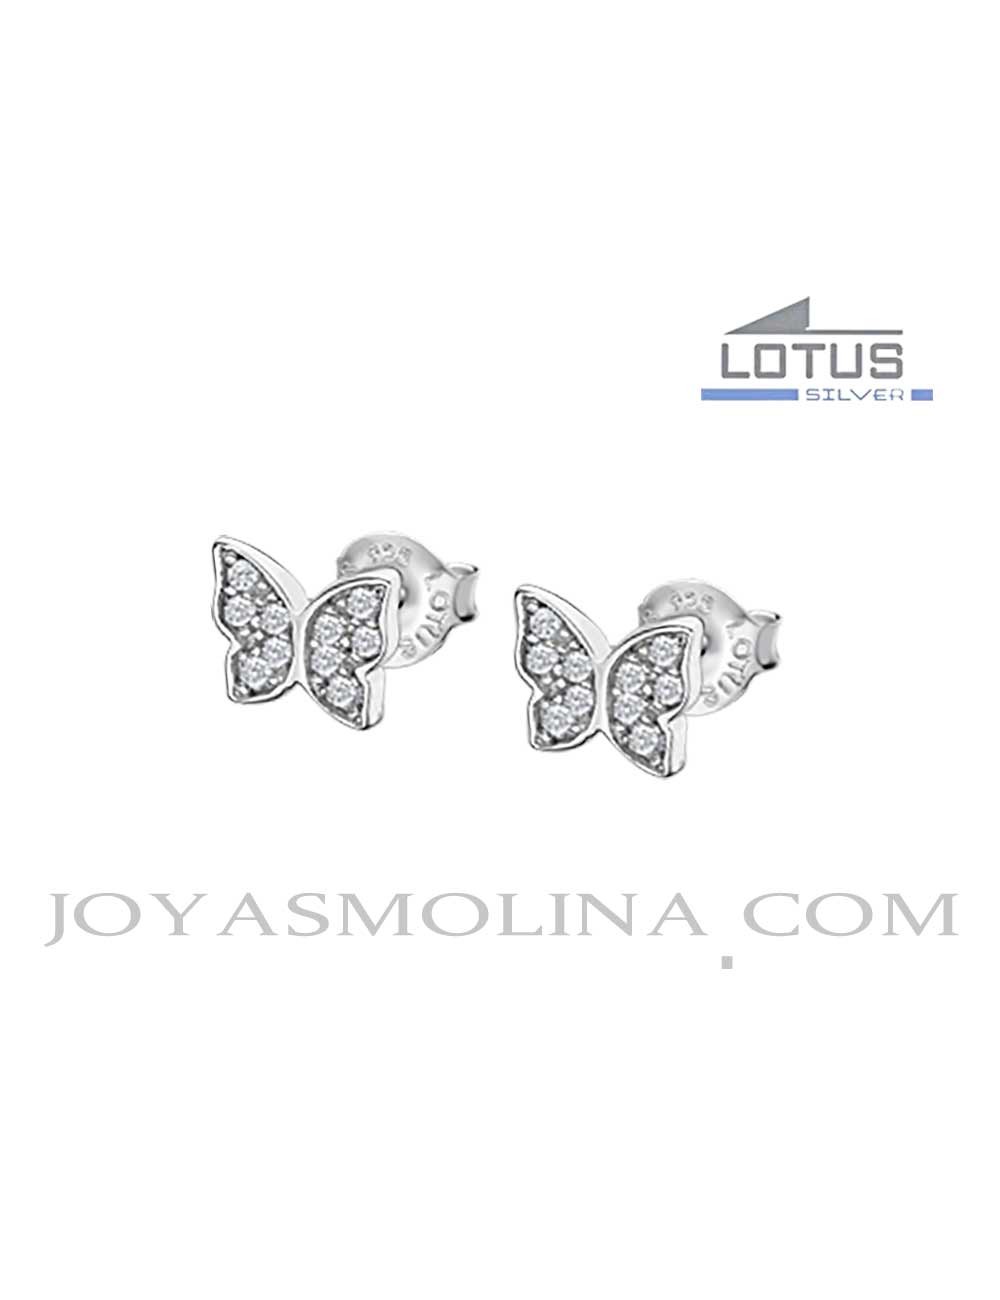 Pendientes Lotus plata mariposas circonitas